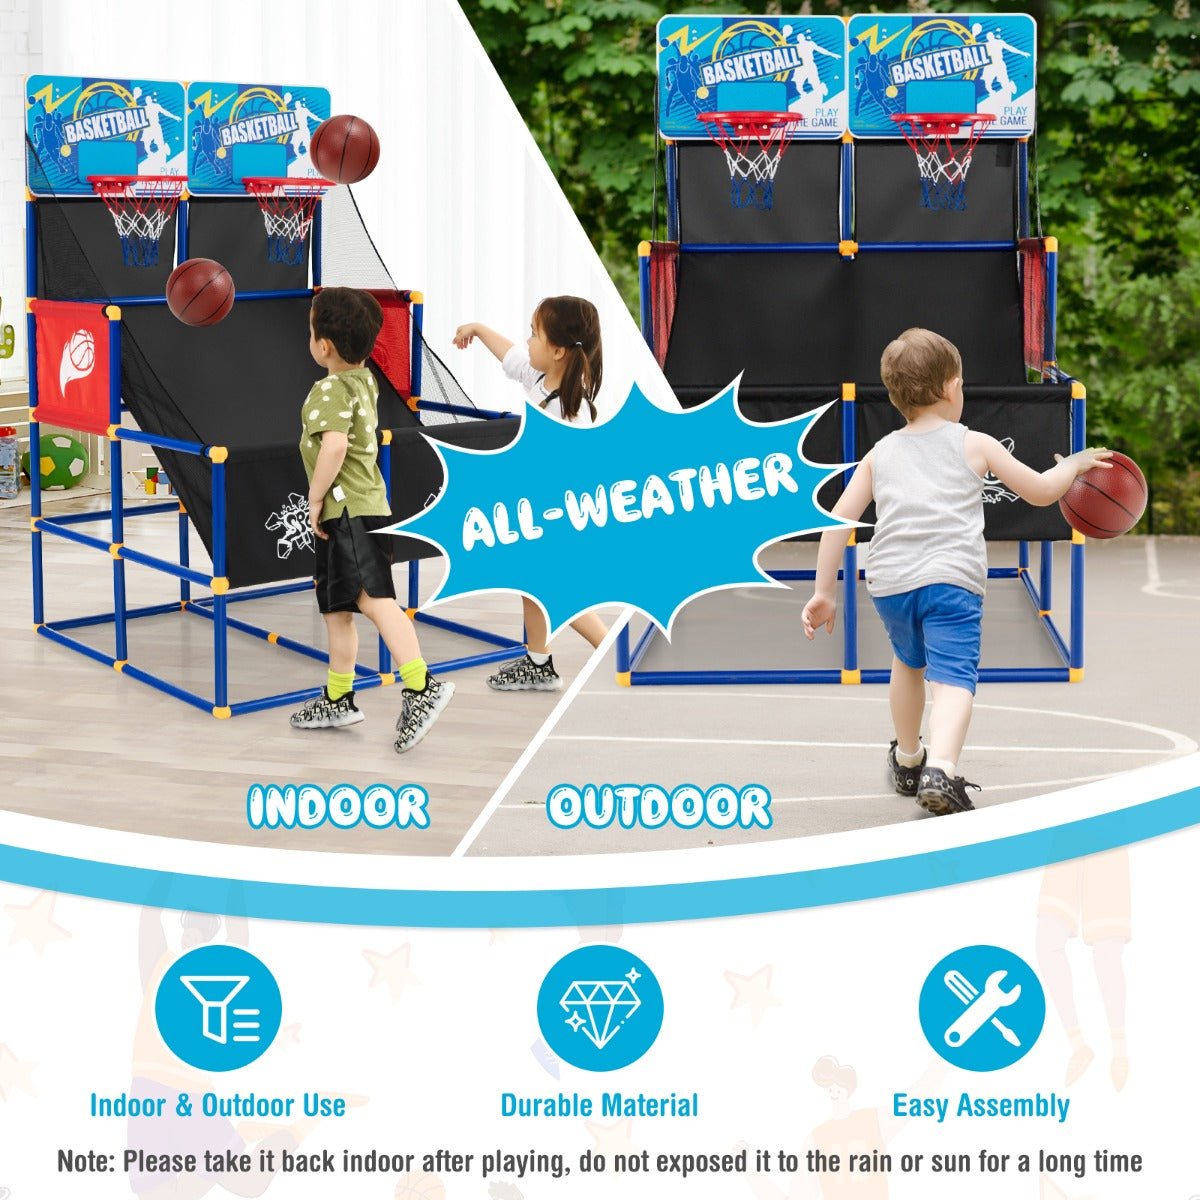 Hoops Galore: Dual Shot Basketball Arcade Game for Kids, 2 Hoops